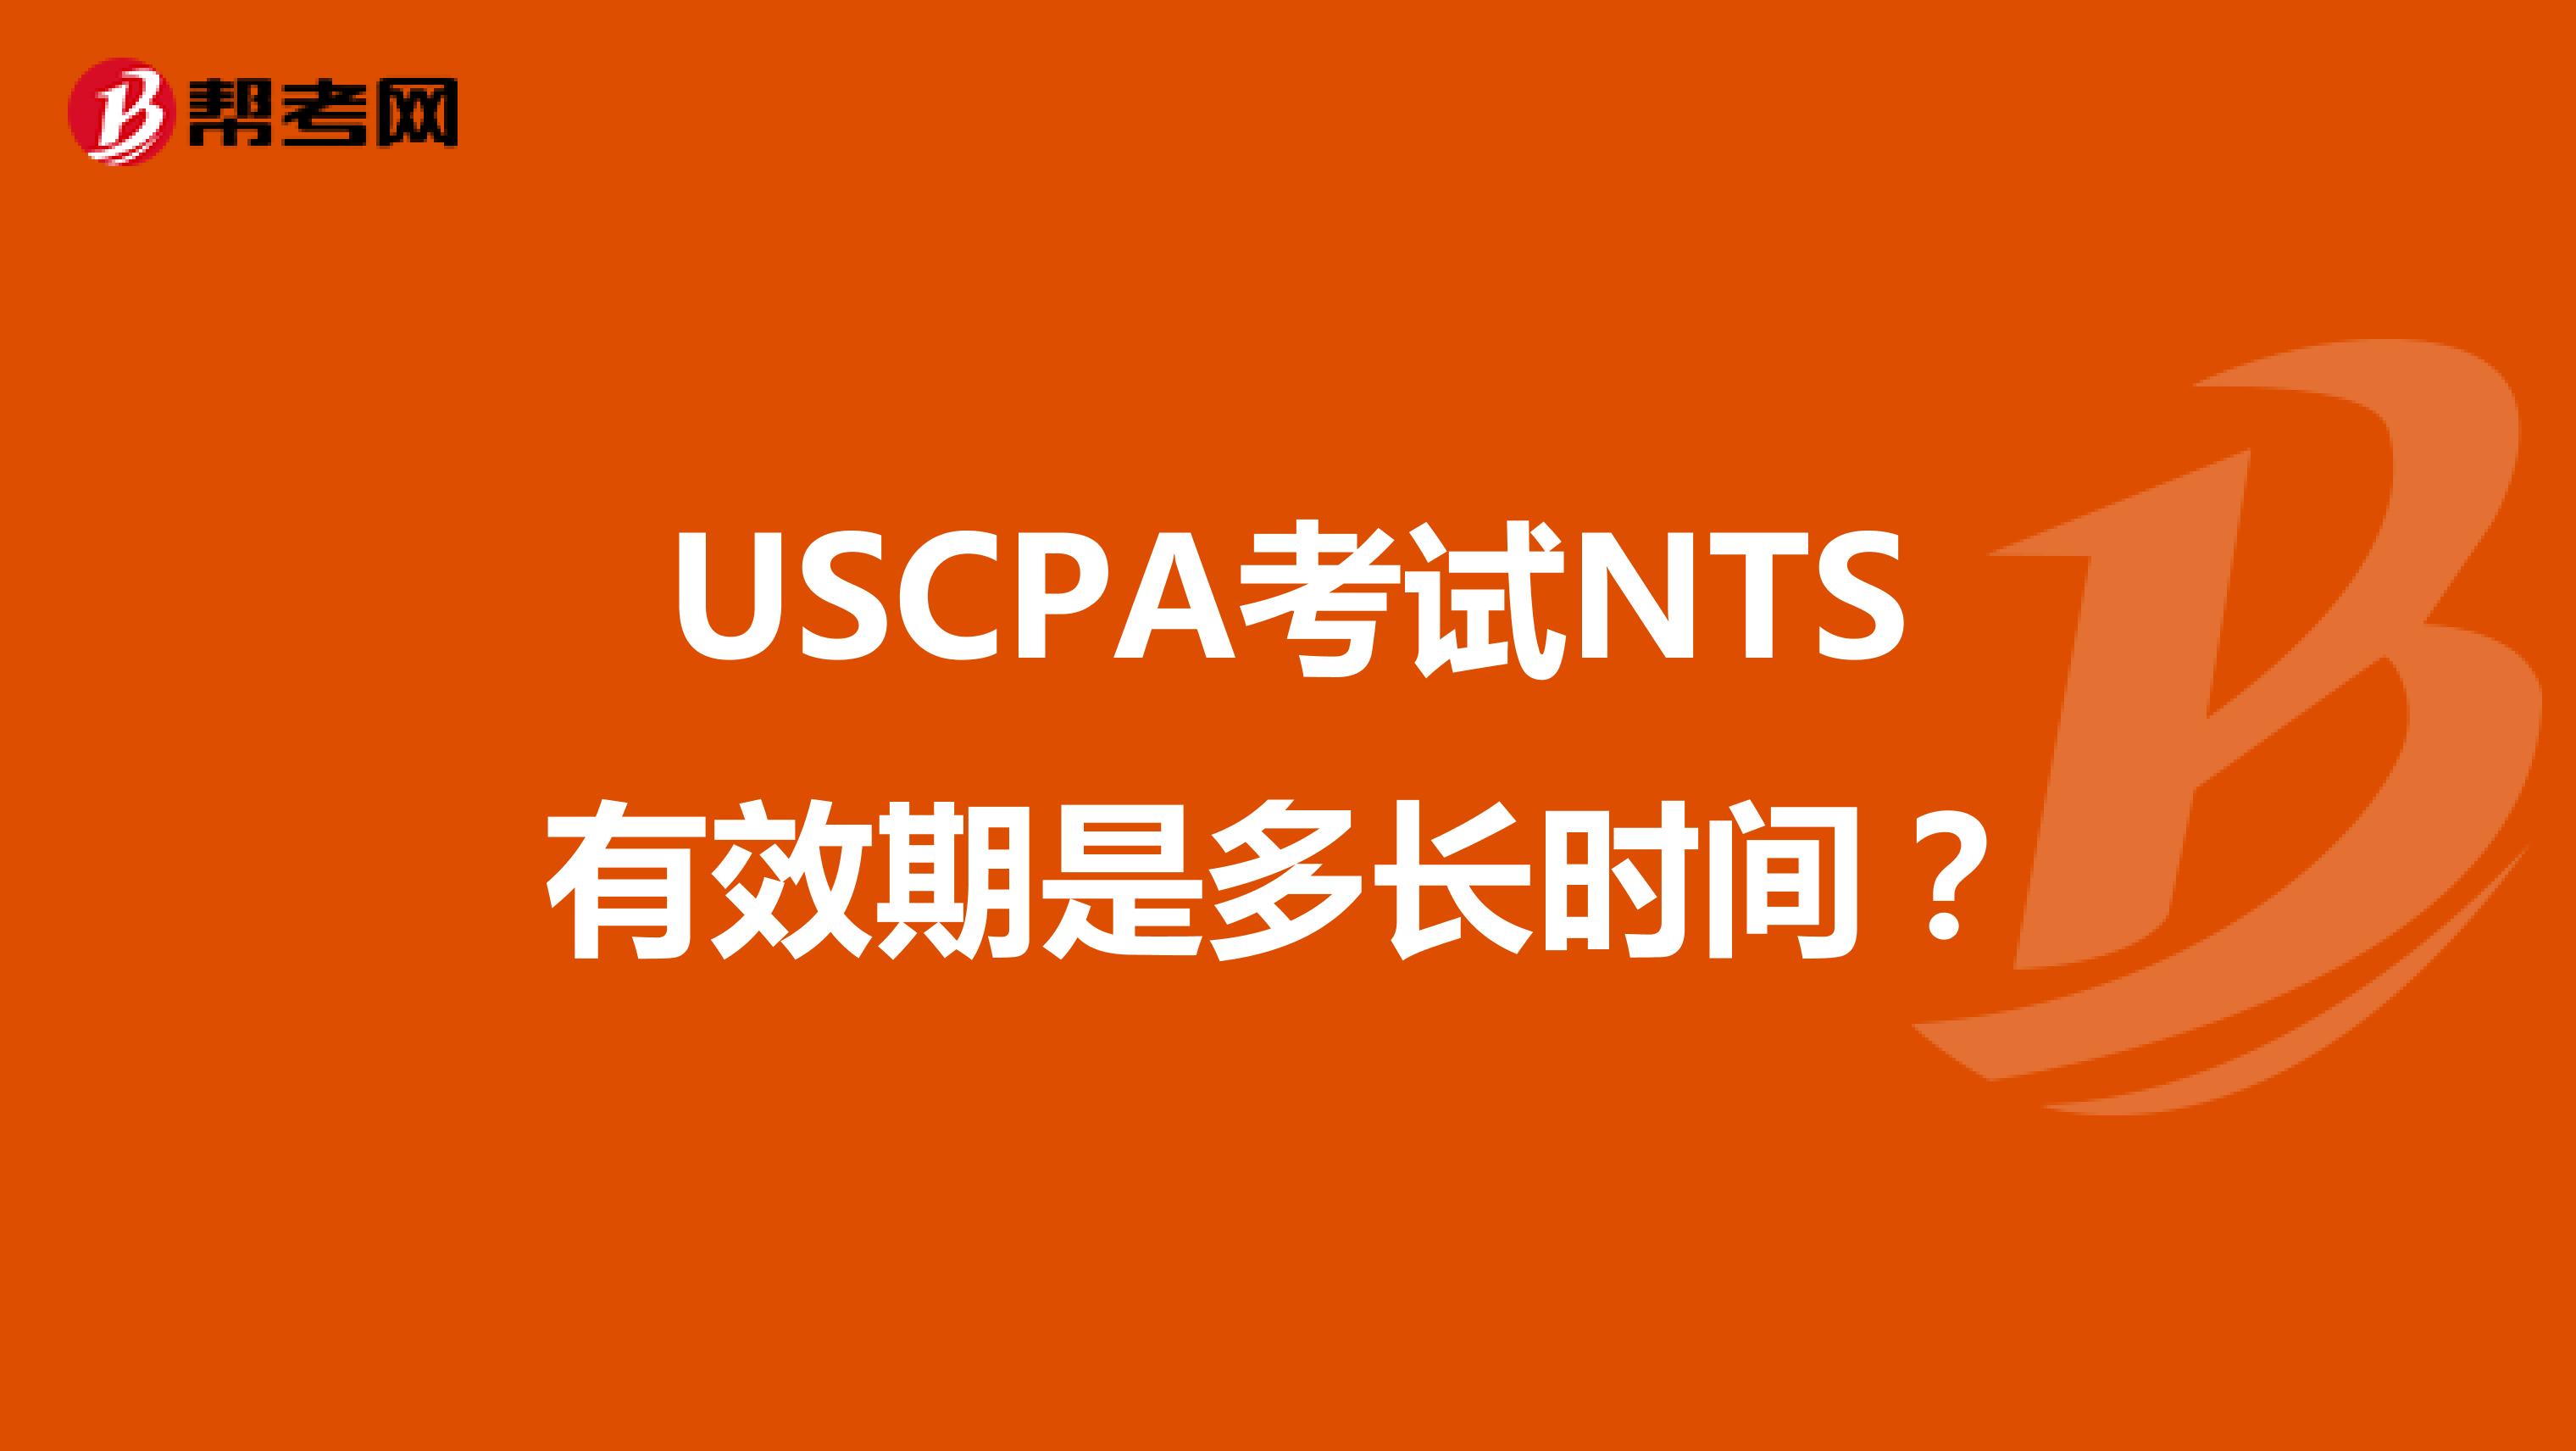 USCPA考试NTS有效期是多长时间？